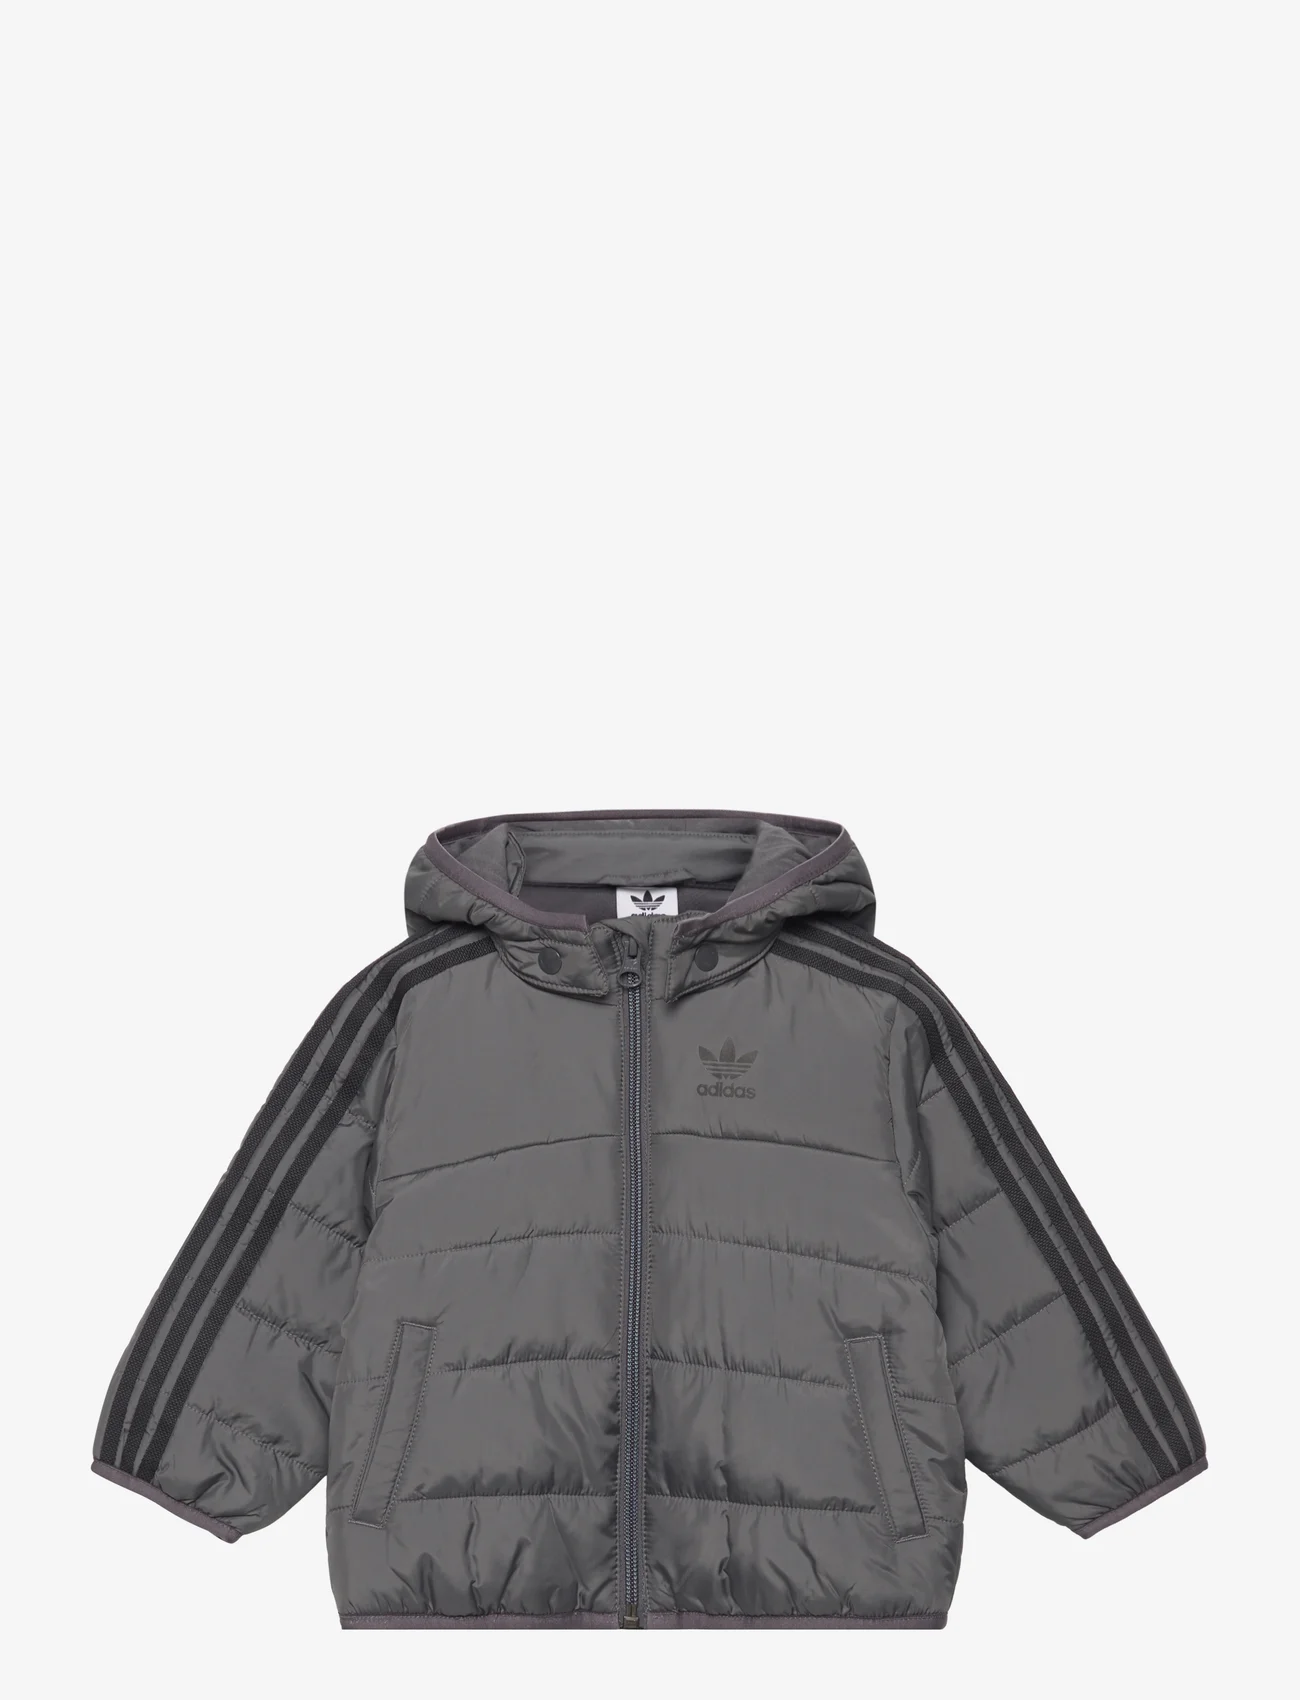 adidas Originals - PADDED JACKET - insulated jackets - grefiv - 0